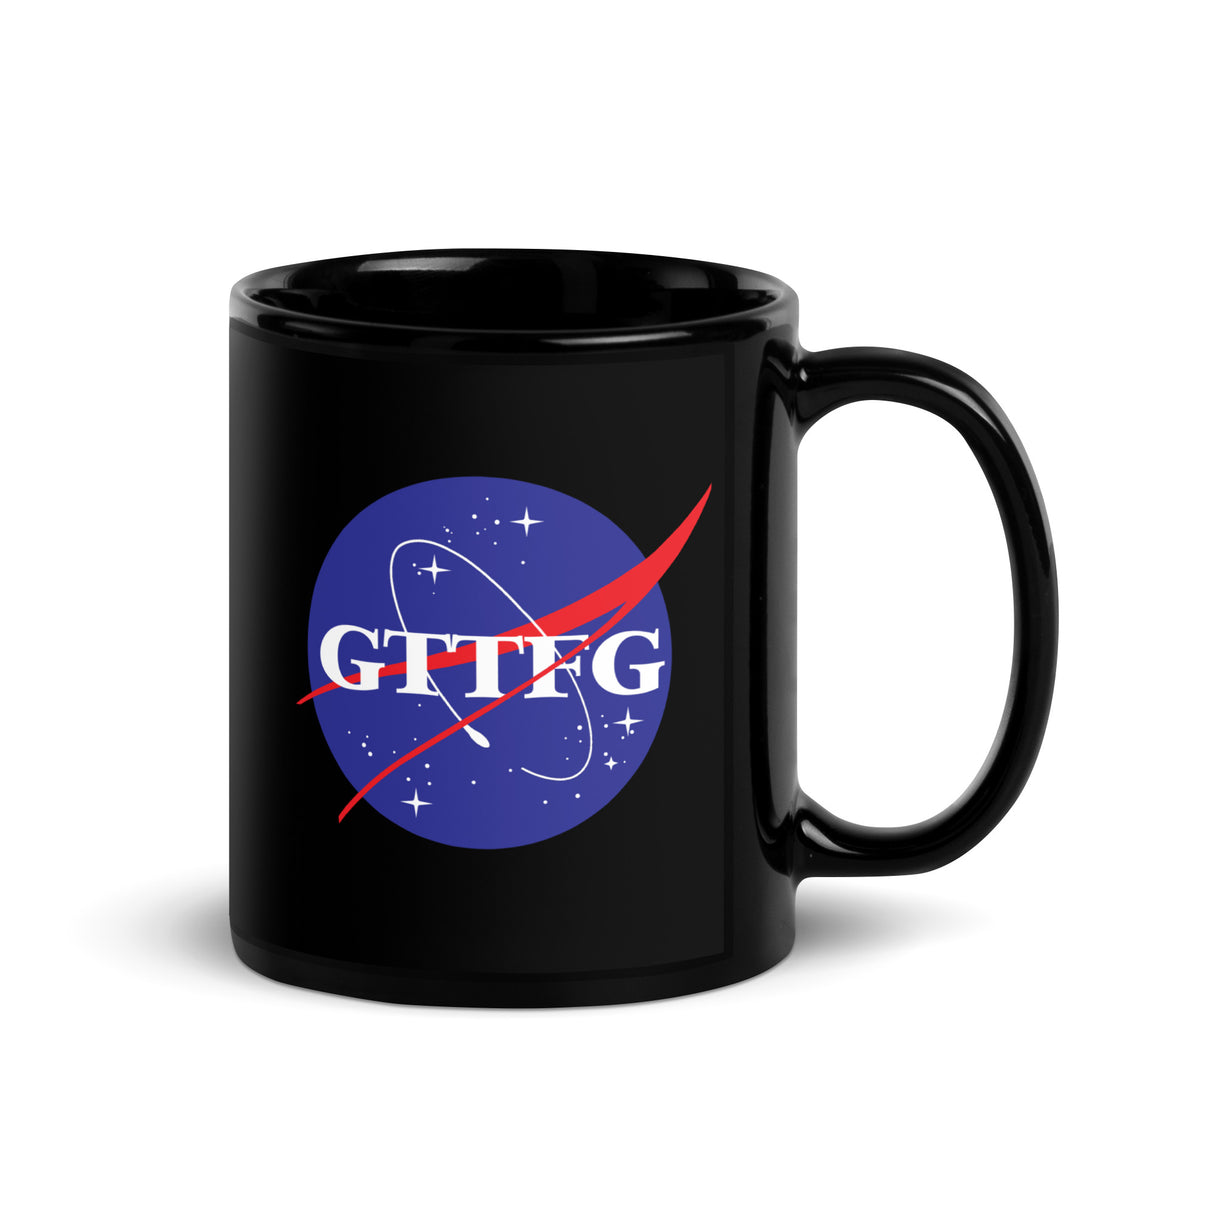 NASA GTTFG Mug